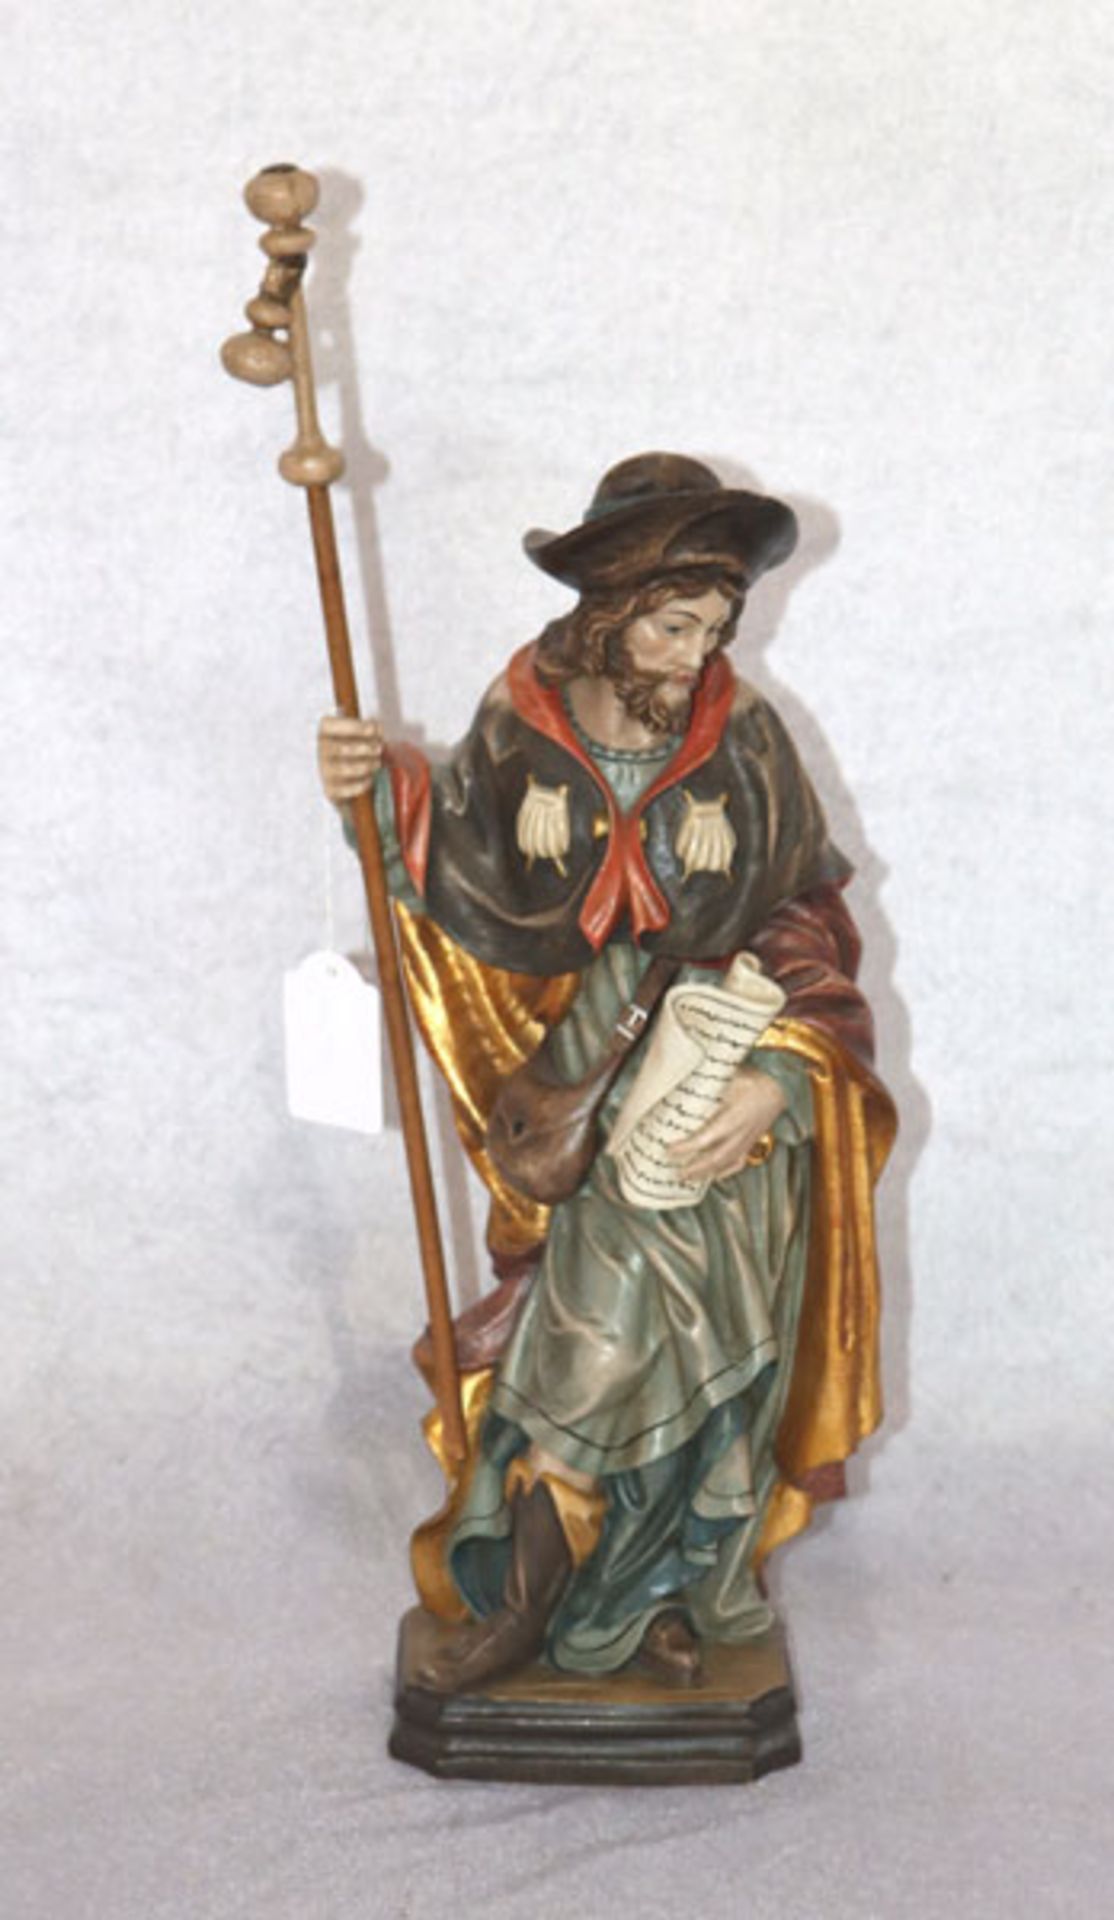 Holz Figurenskulptur 'Heiliger Jakobus', farbig gefaßt, H 44 cm